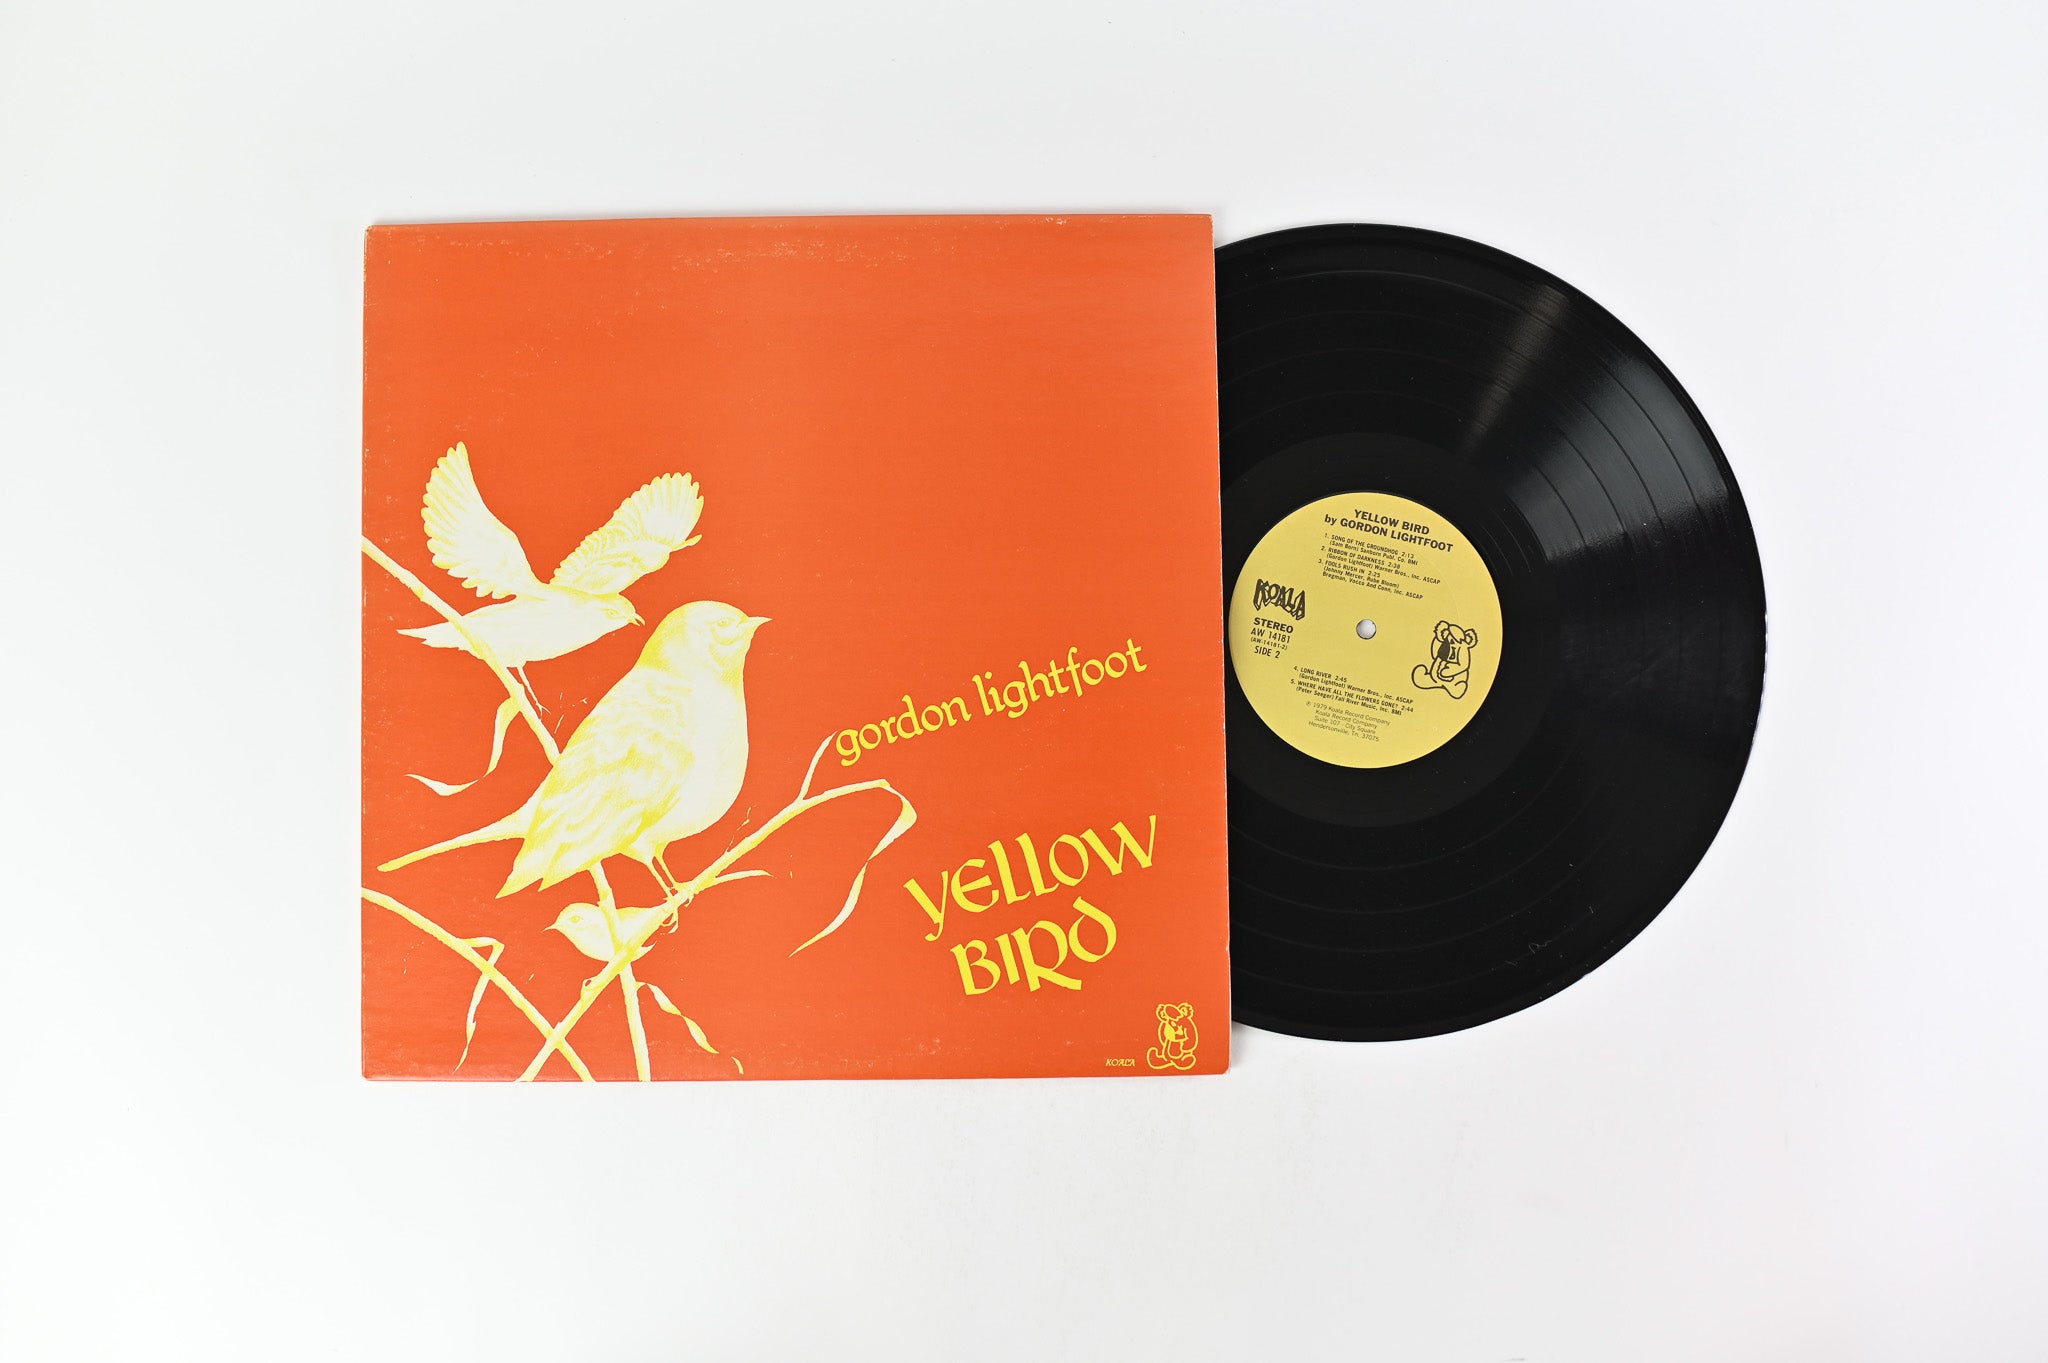 Gordon Lightfoot - Yellow Bird Unofficial Release on Koala